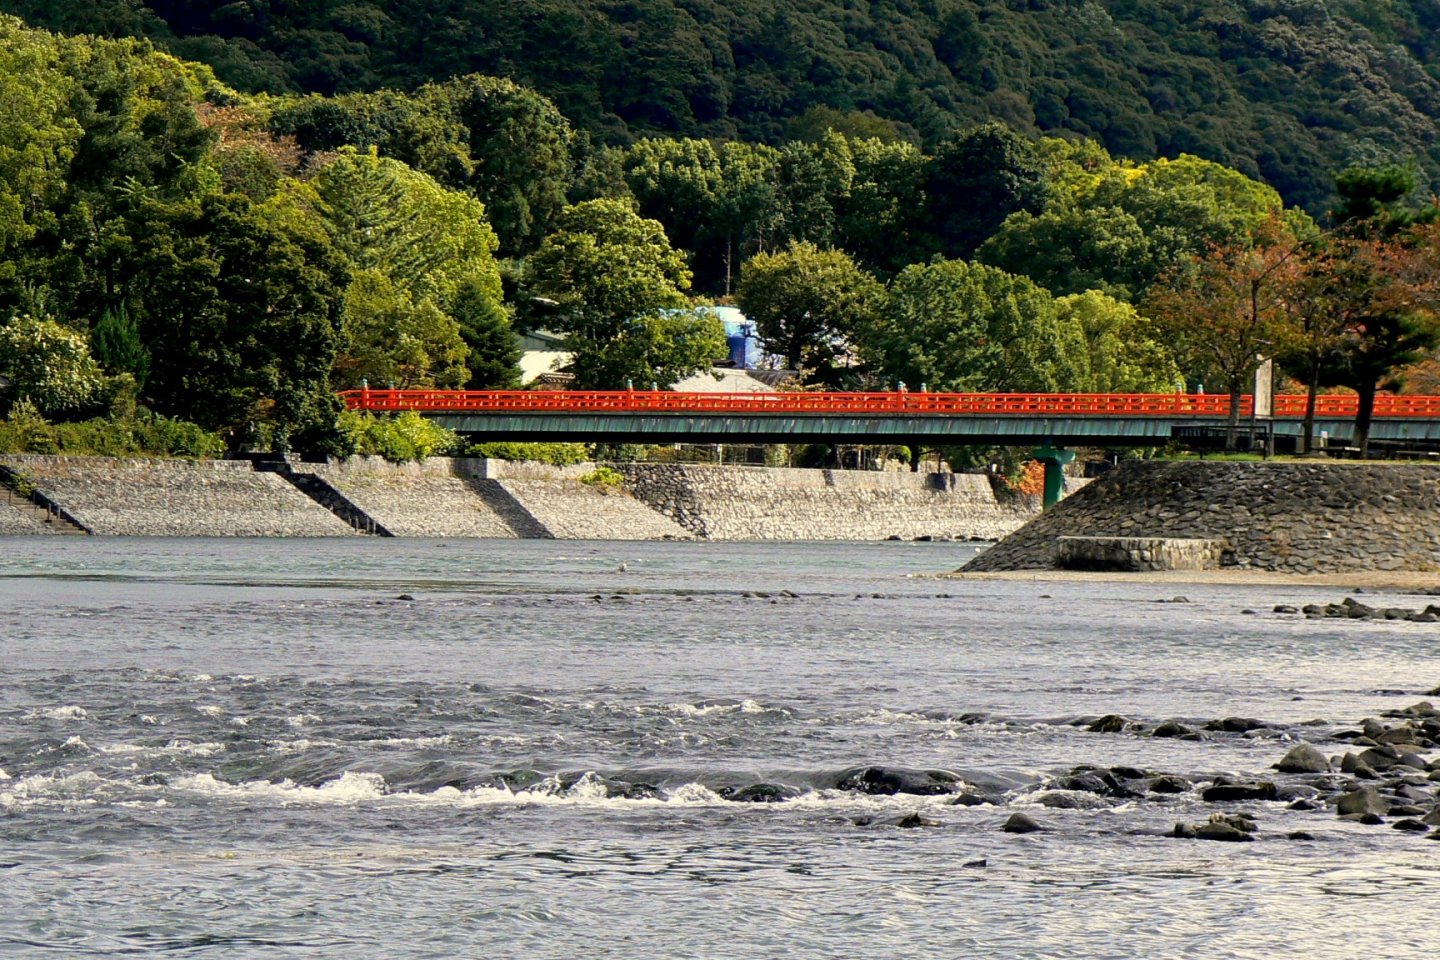 A red pedestrian bridge spans the river